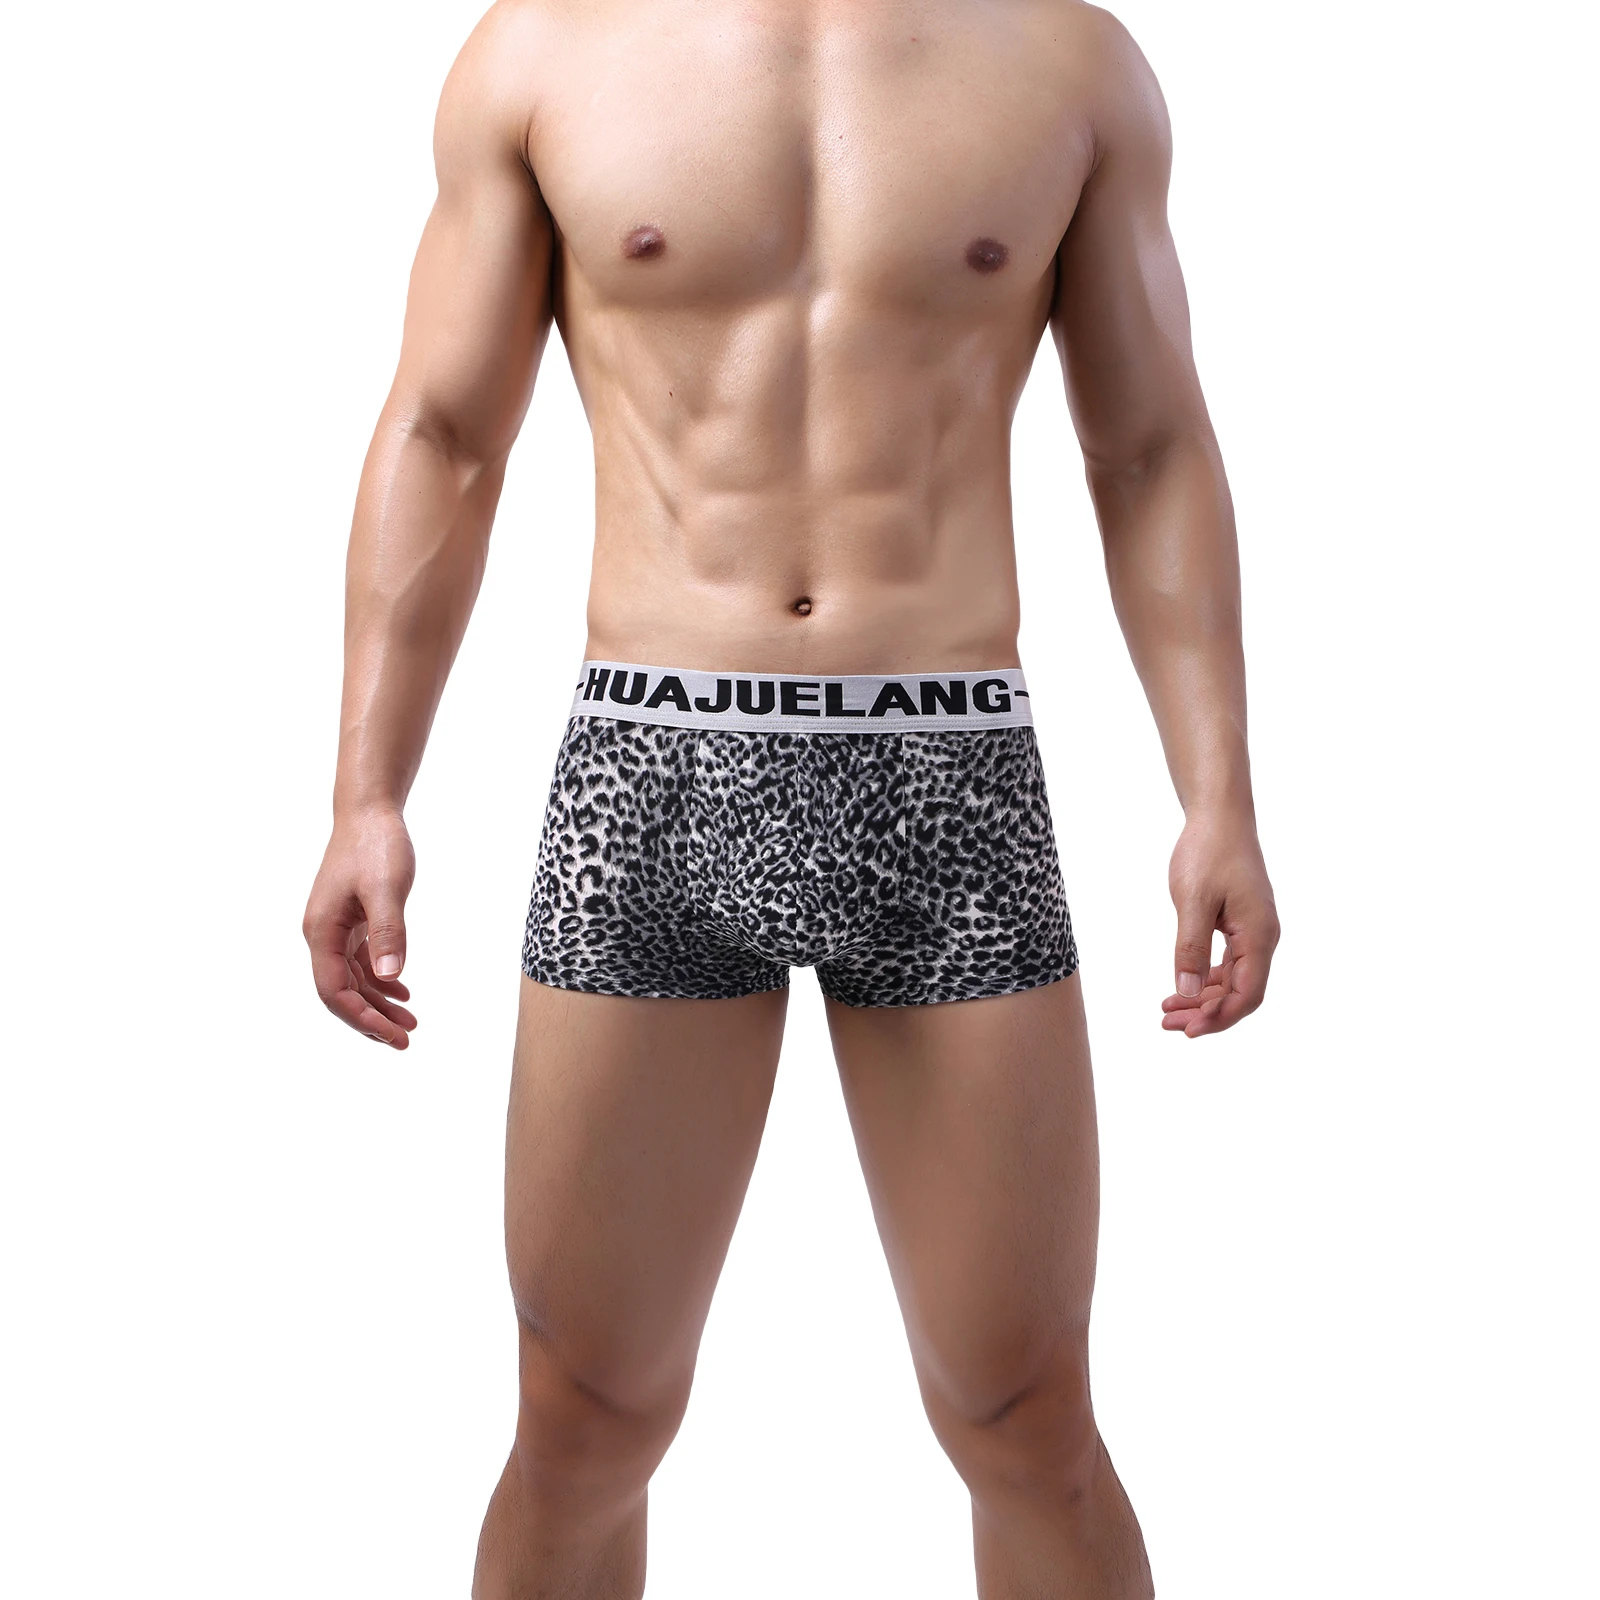 U Convex Men's Leopard Prints Slim Trunks Smooth Bulge Boxer Briefs Underwear